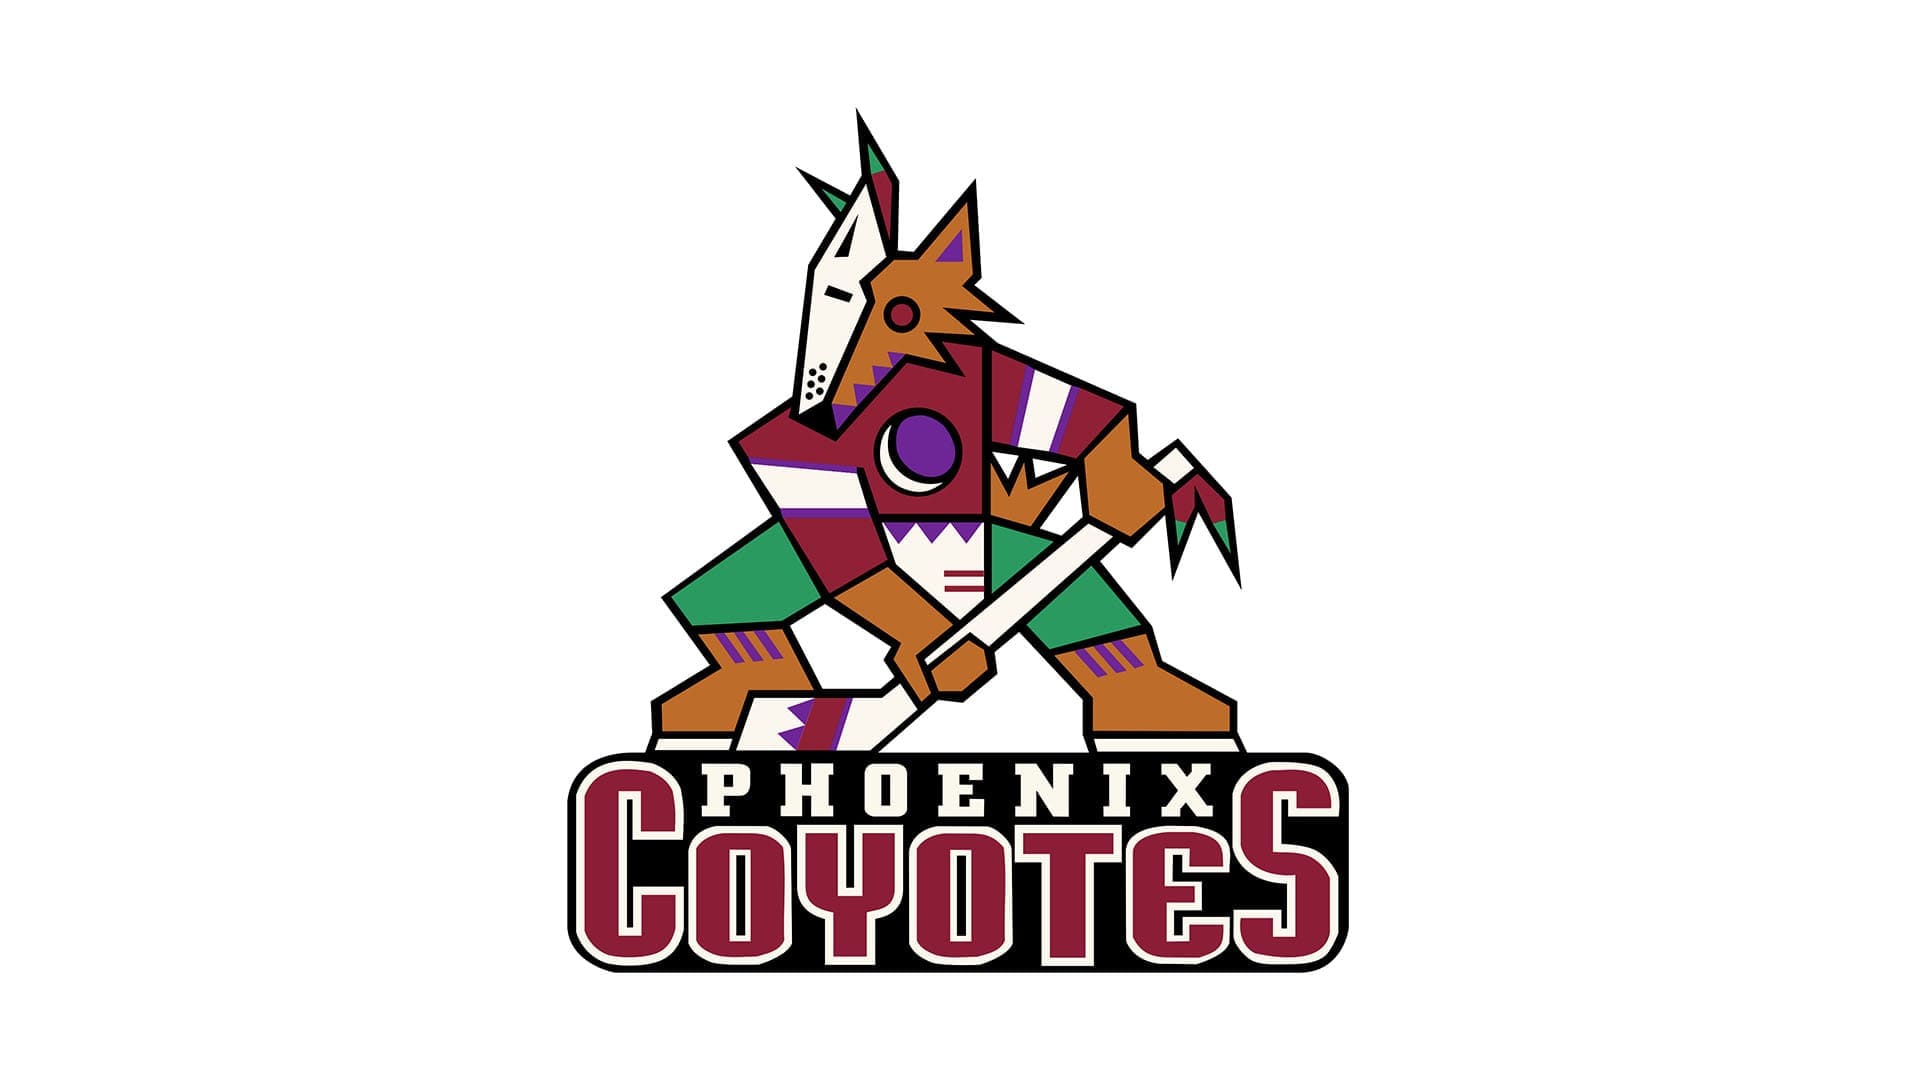 coyotes logo png